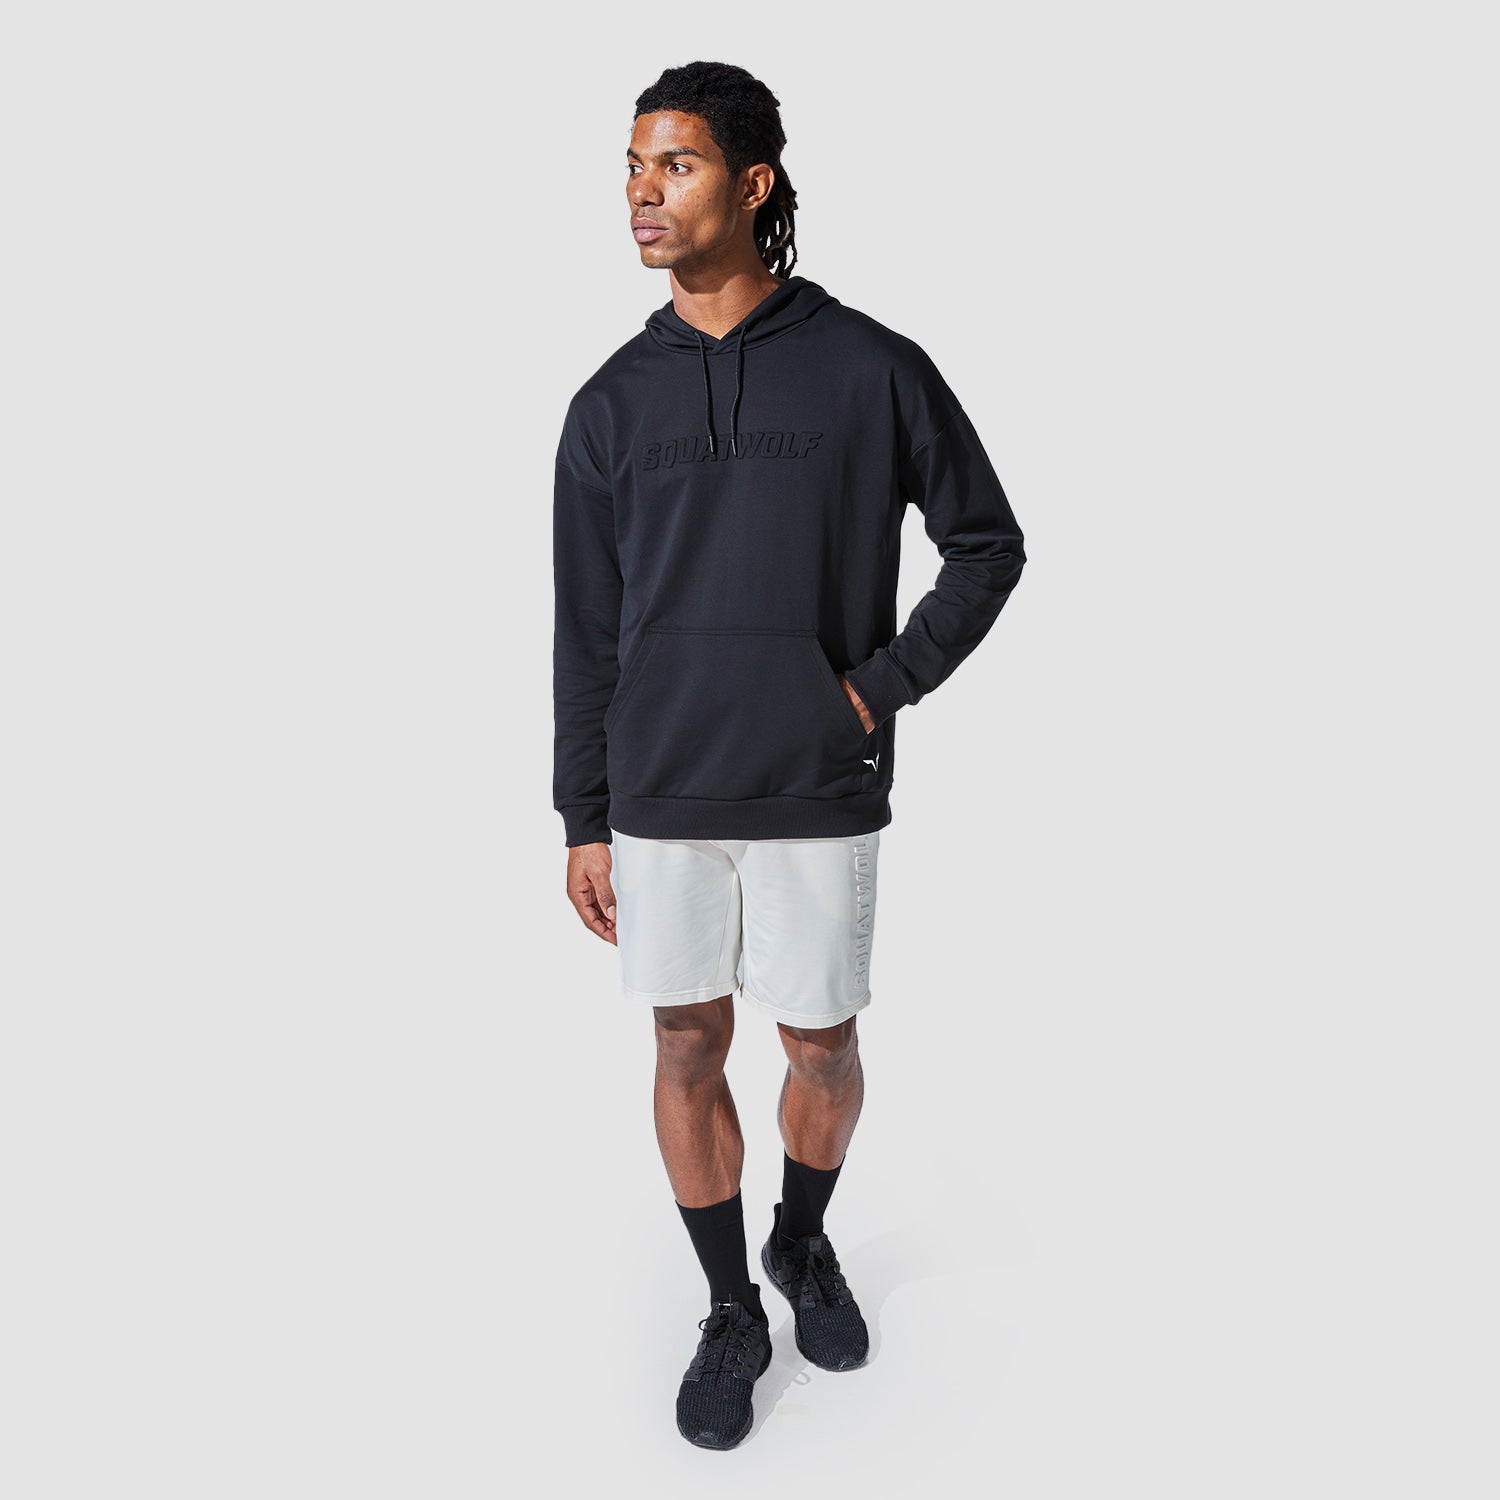 squatwolf-gym-wear-graphic-wordmark-hoodie-black-workout-hoodies-for-men